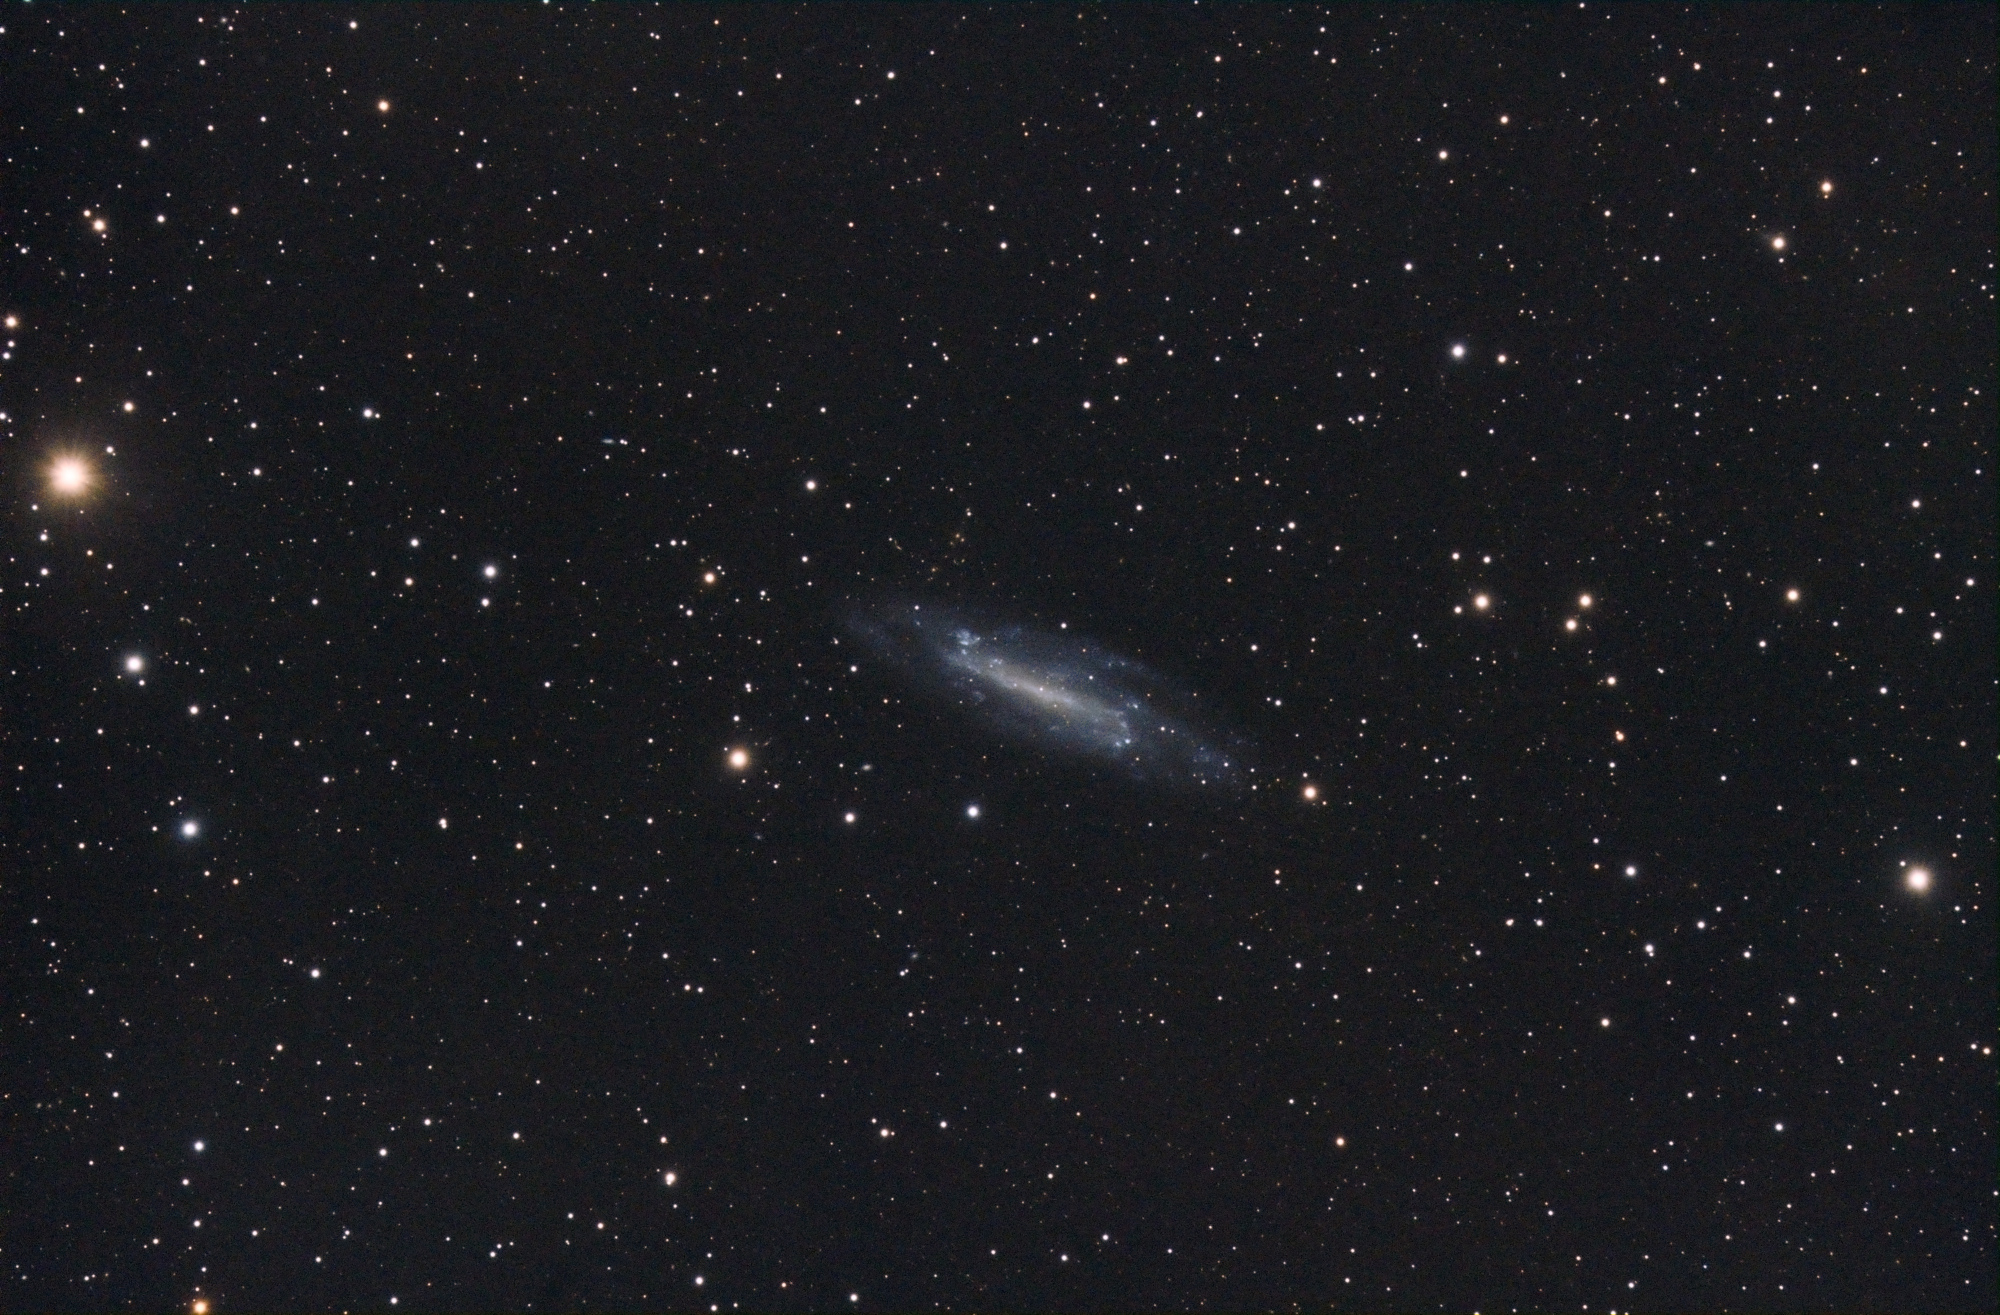 NGC_4236_SIRIL-1-iris-cs5-4-FINAL-2b-x.jpg